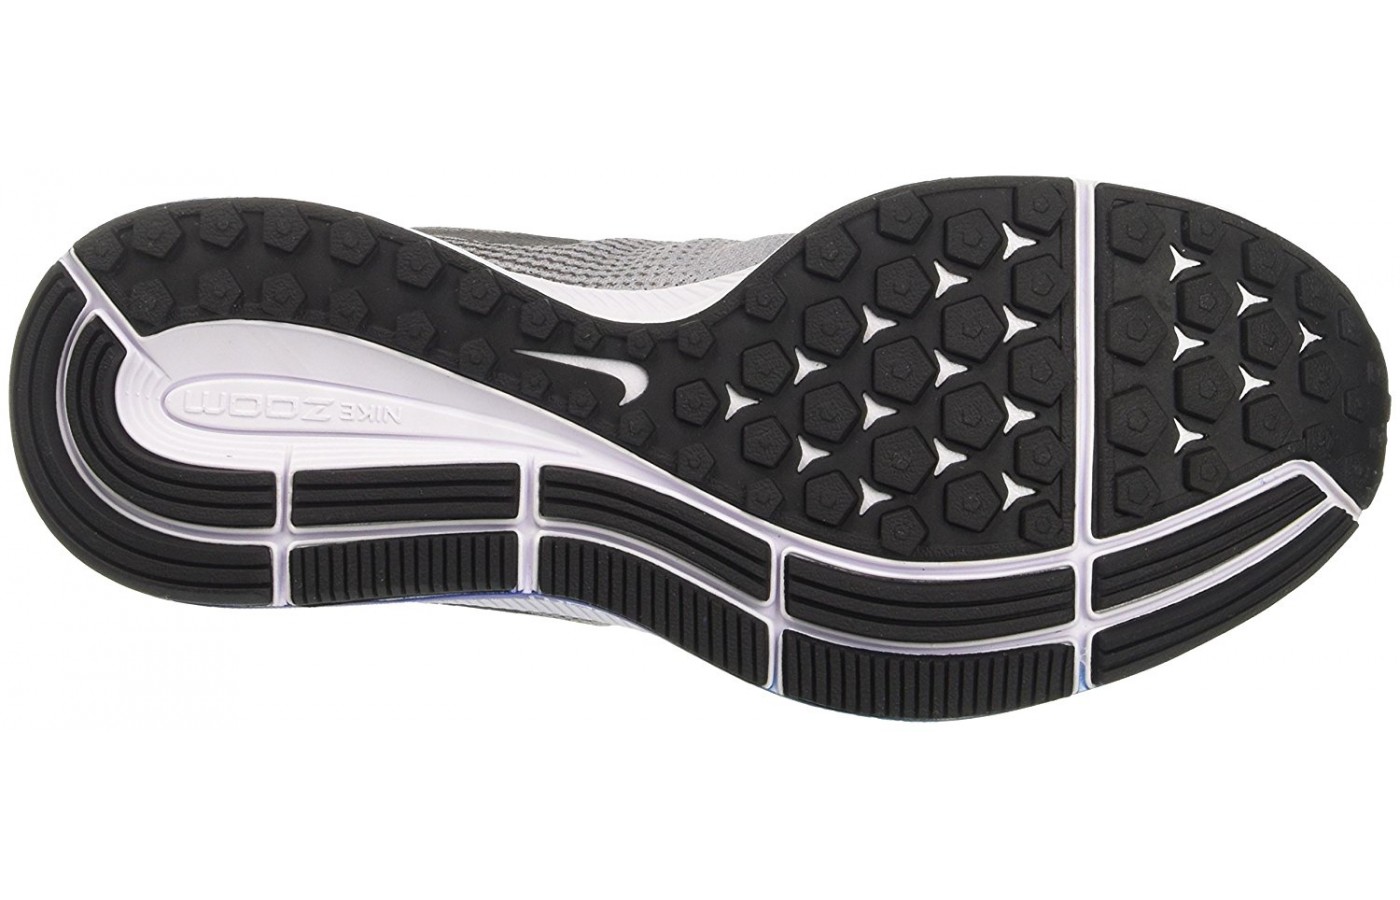 Three bottom view of the Nike Air Zoom Pegasus 33 running shoe